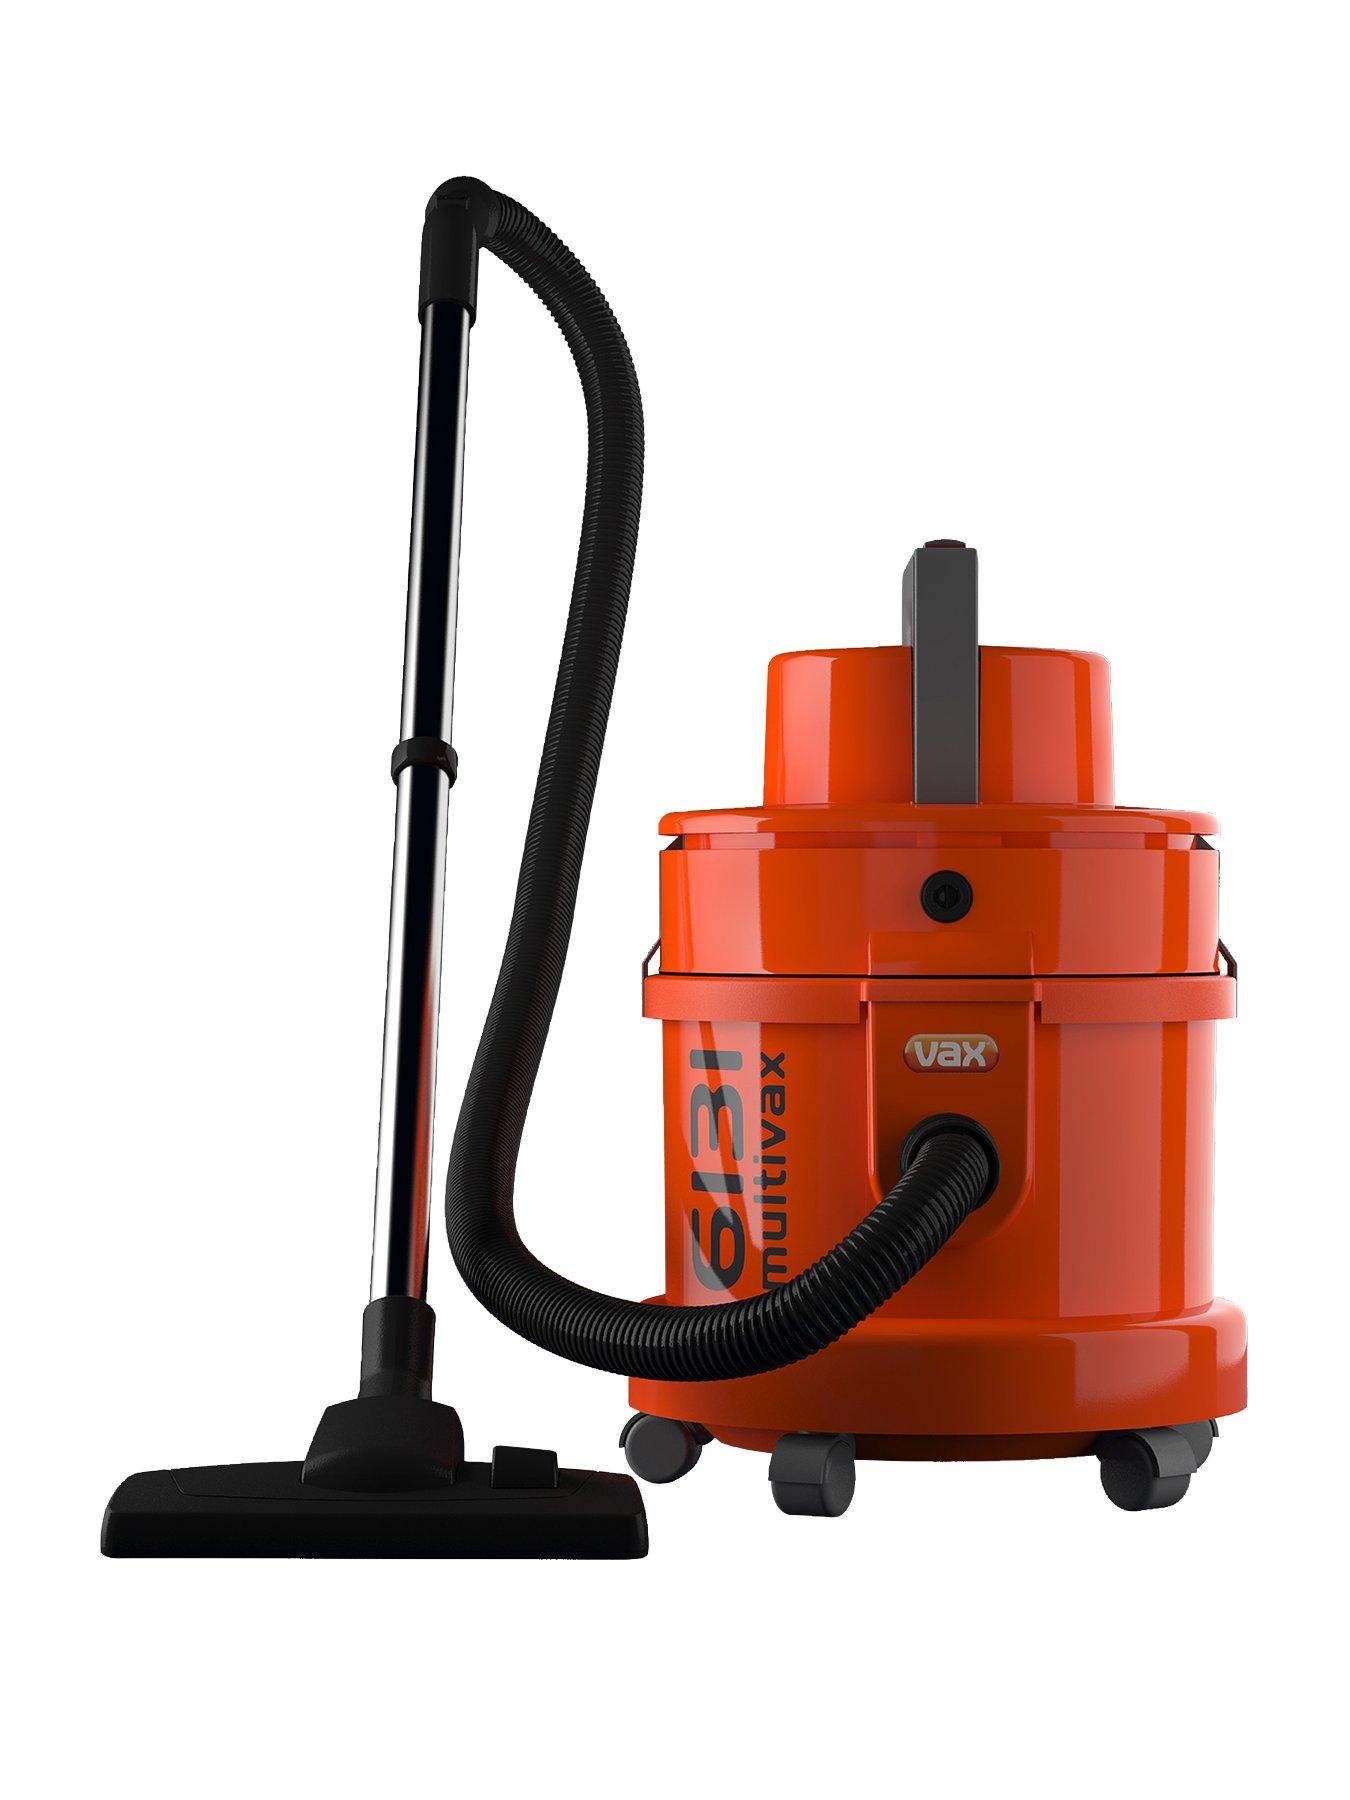 Vax 6131T 1300W Multifunction Carpet Cleaner – Orange